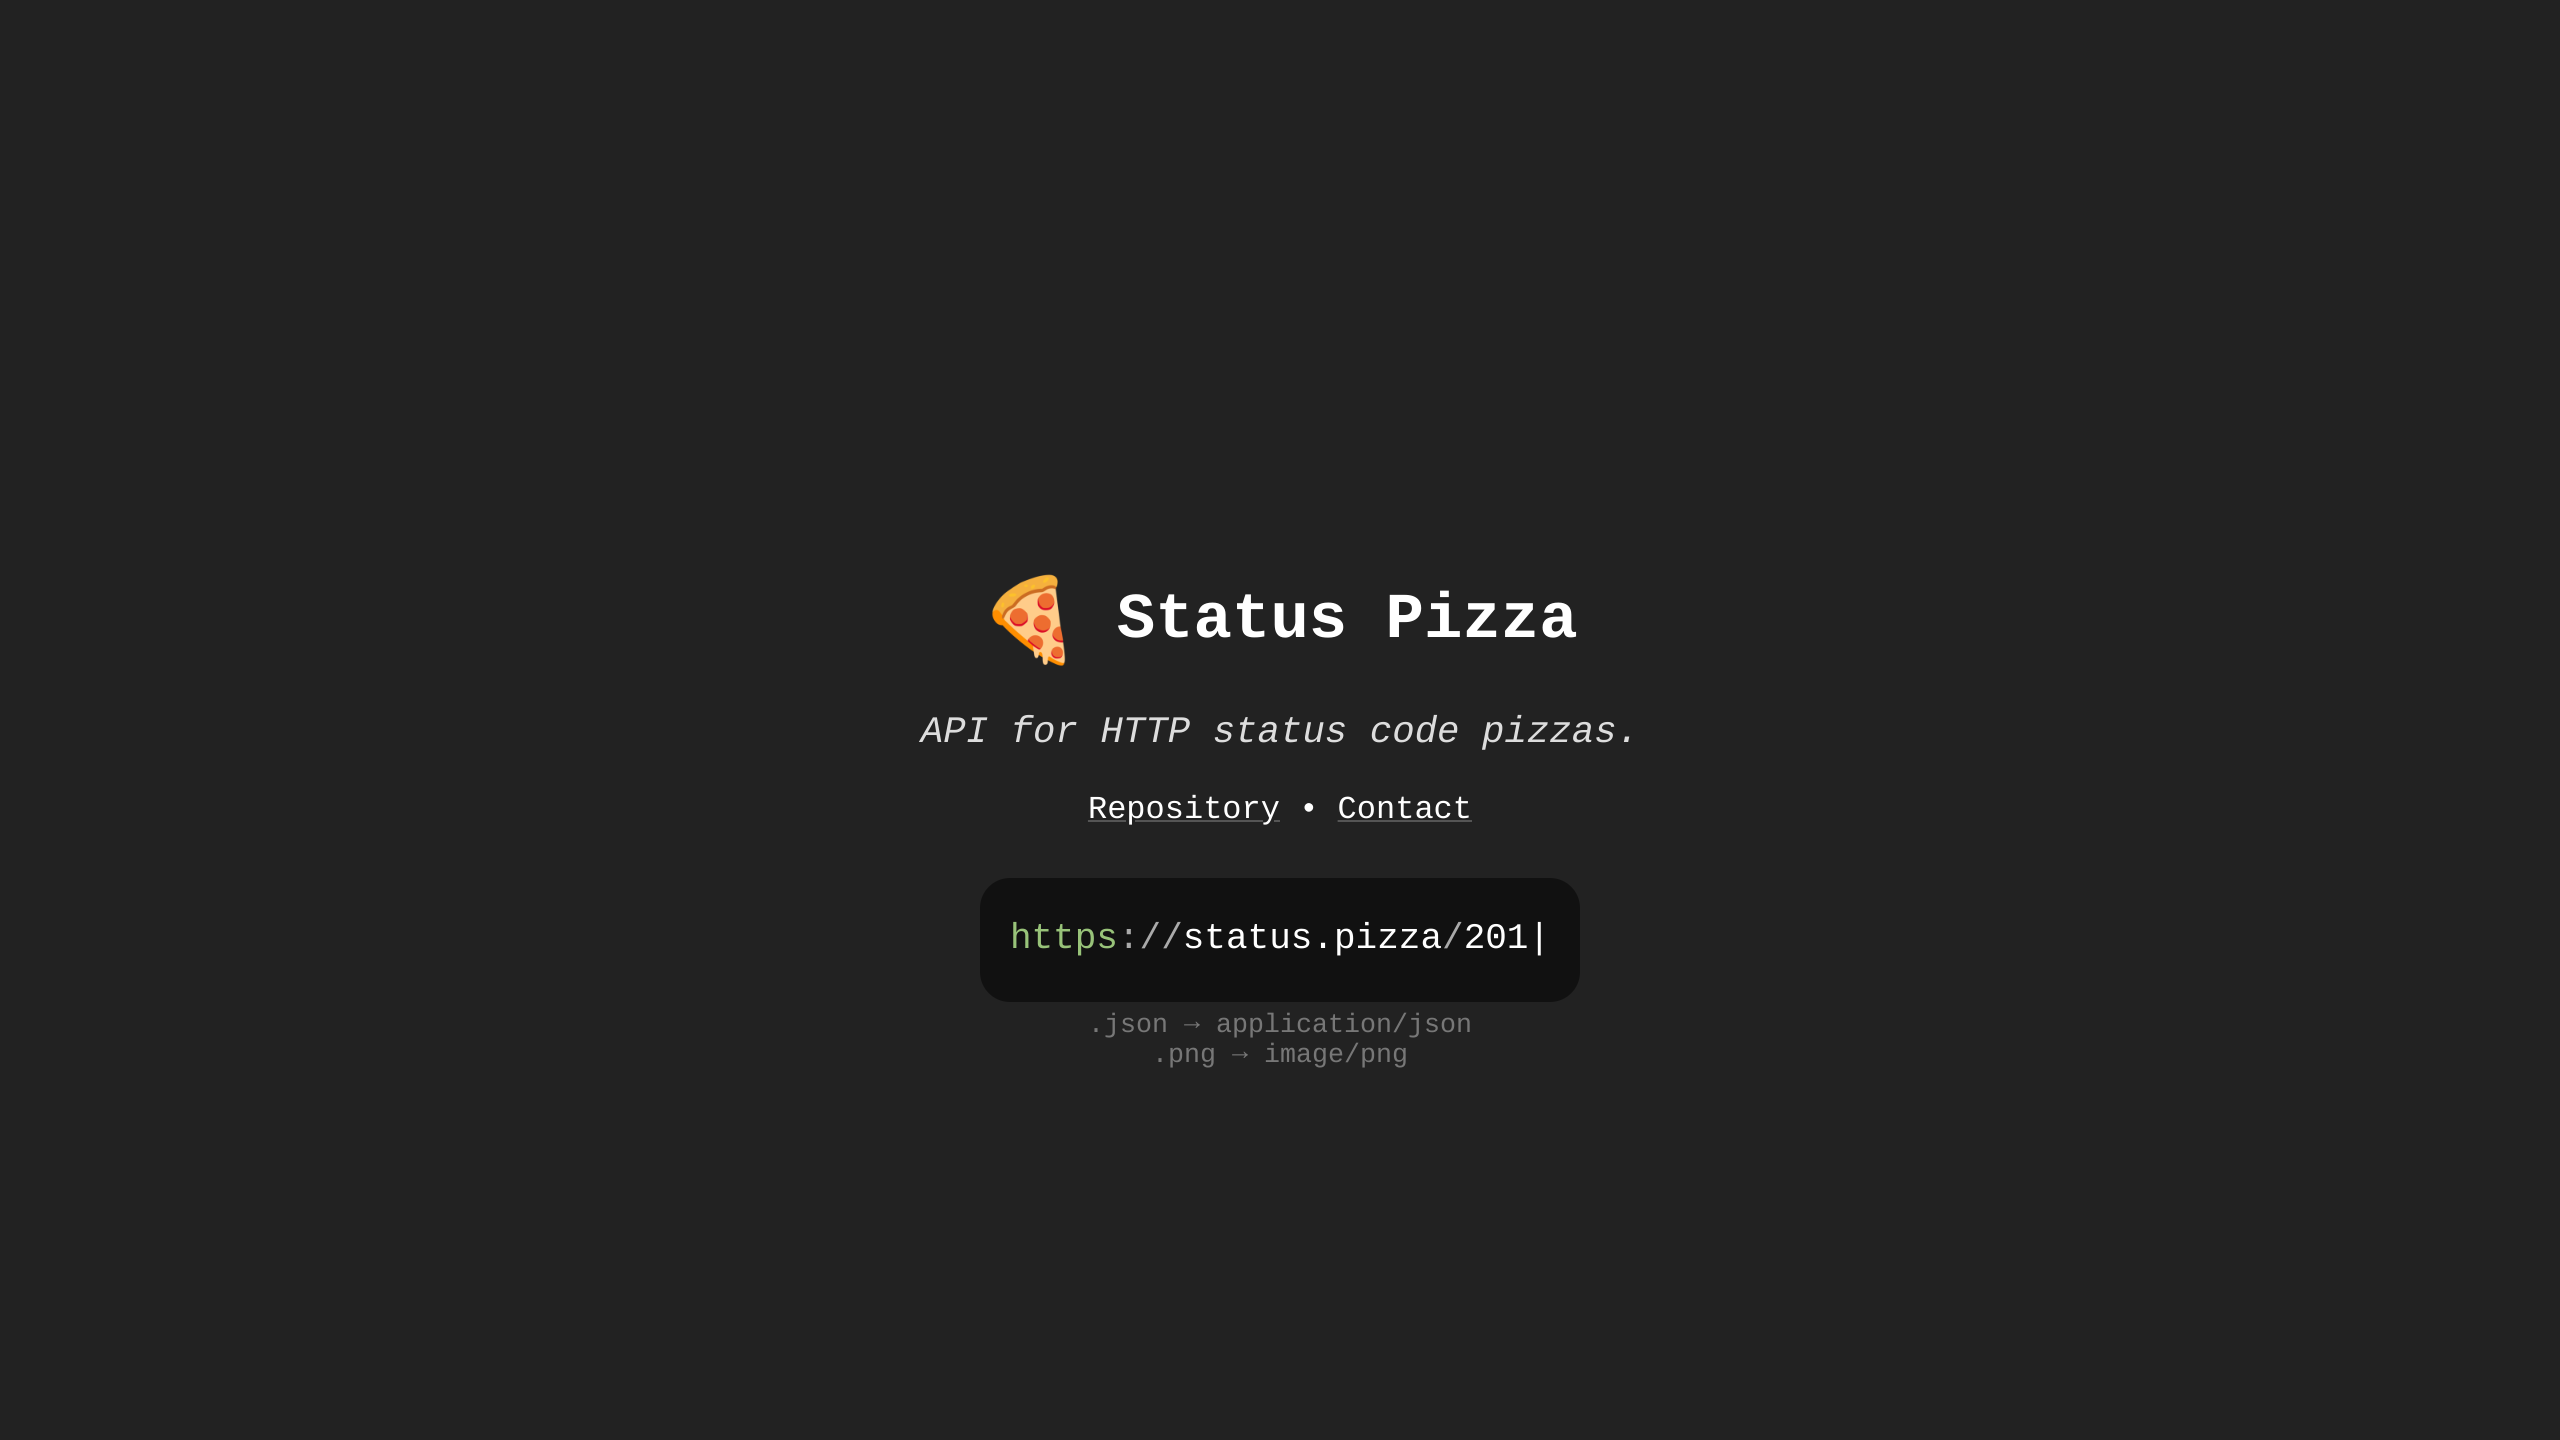 Status Pizza's website screenshot